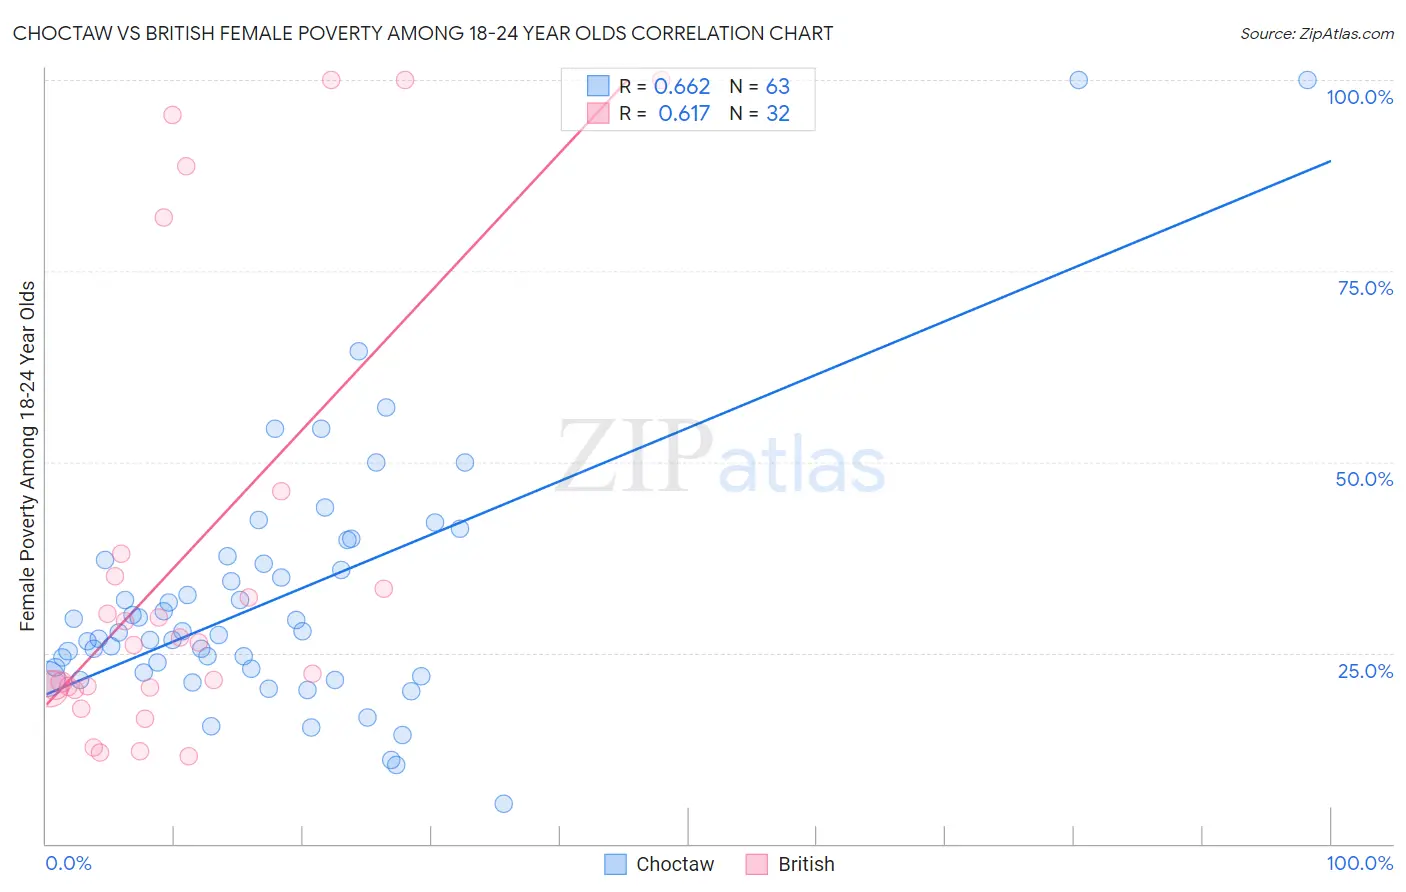 Choctaw vs British Female Poverty Among 18-24 Year Olds